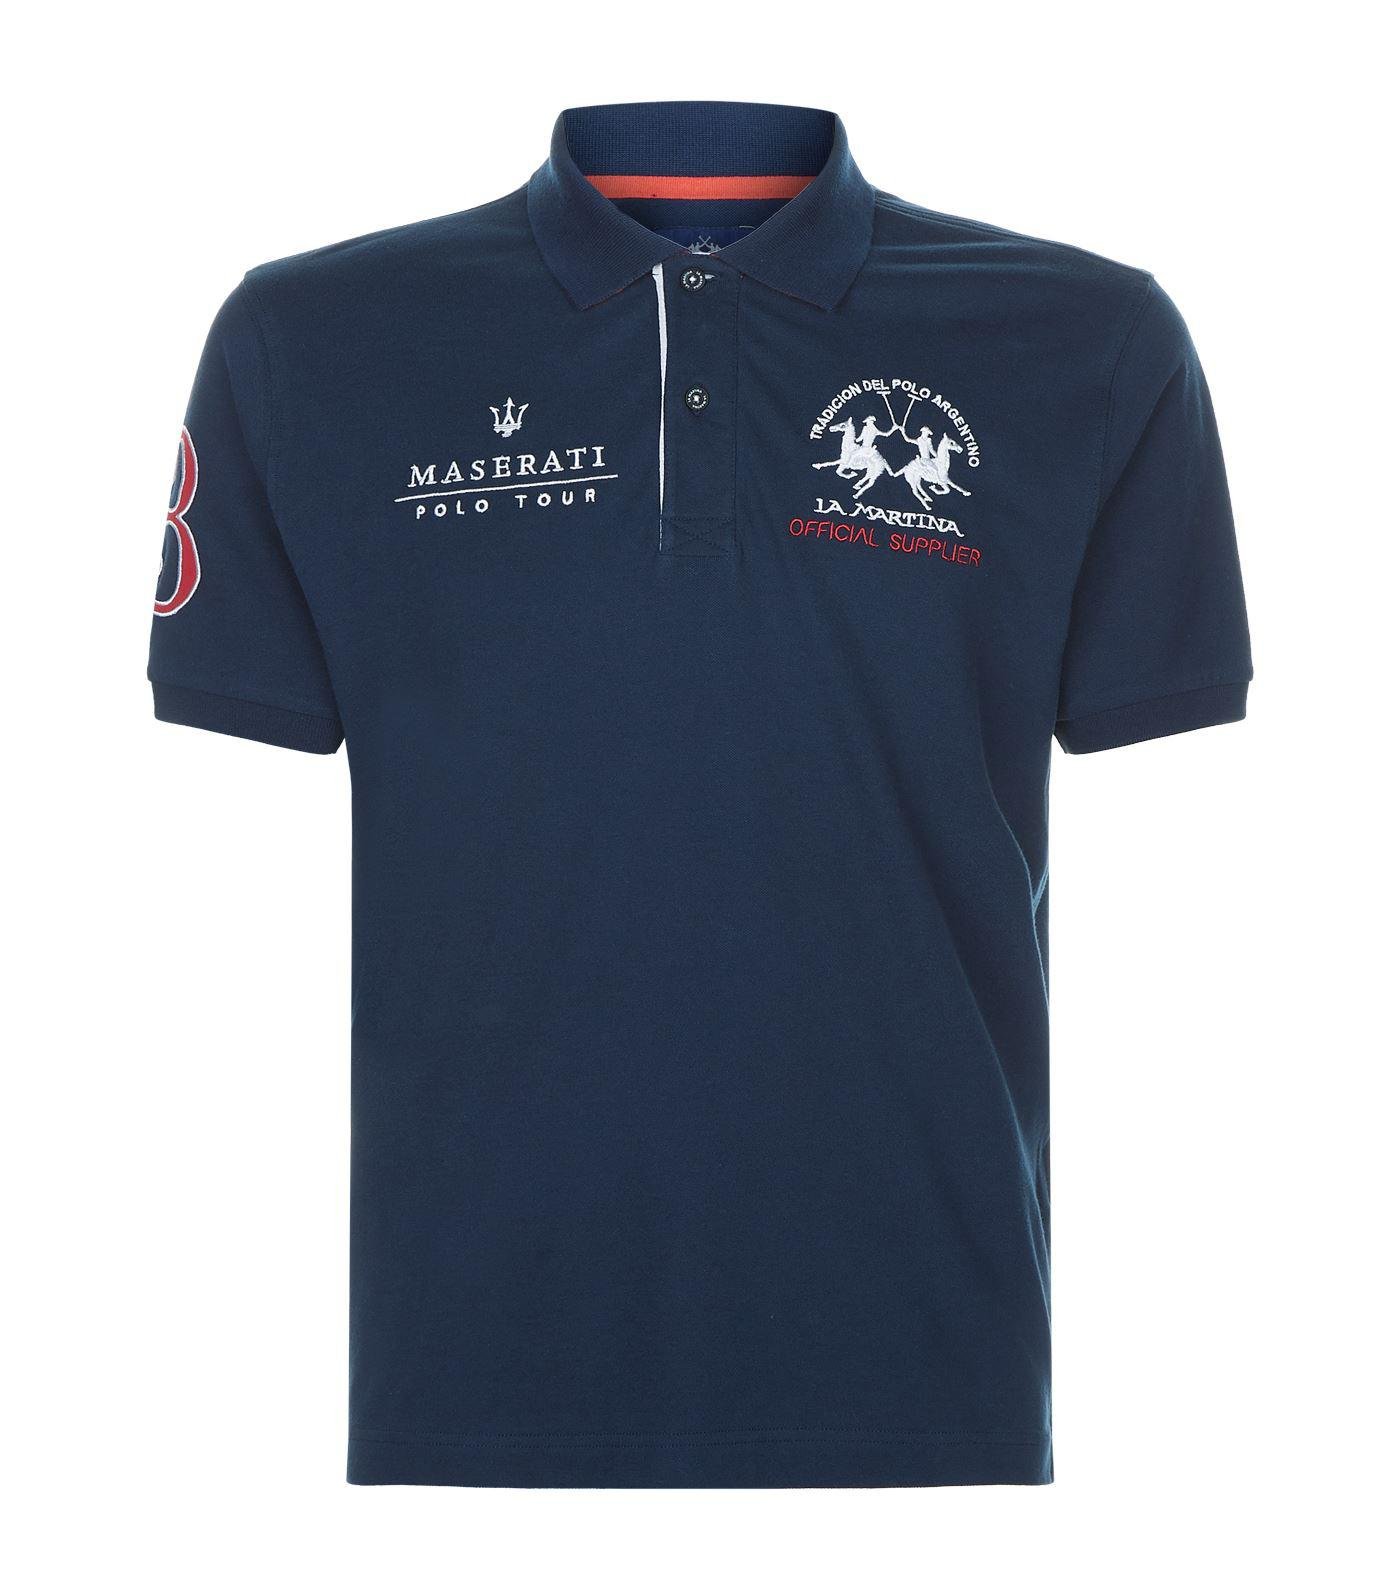 La Martina Cotton Maserati Polo Shirt in Navy (Blue) for Men - Lyst